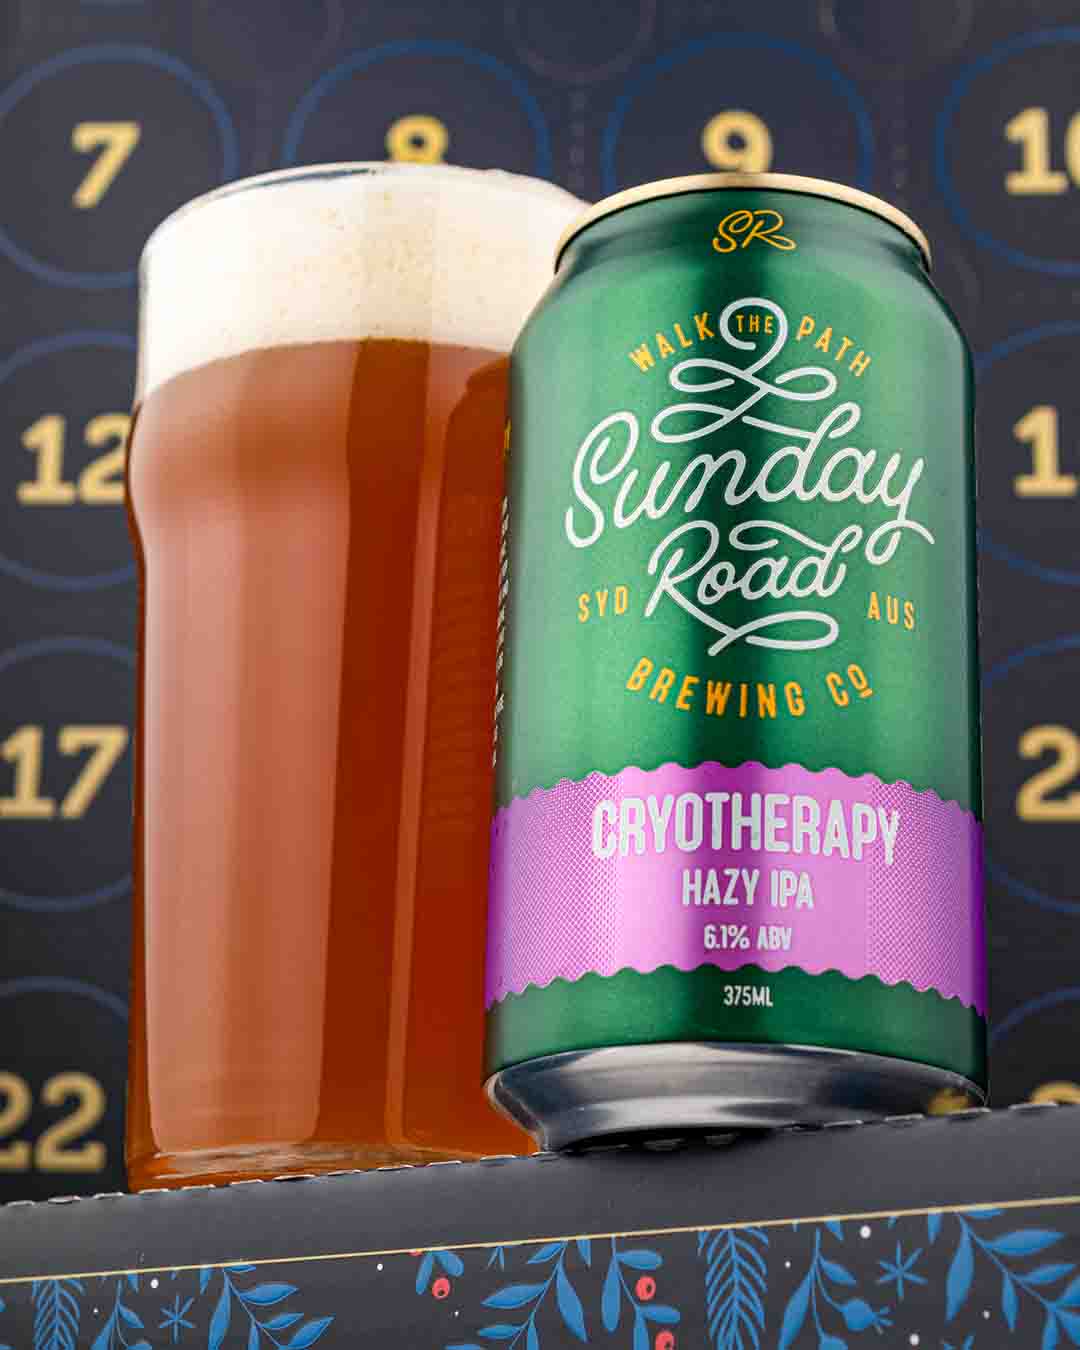 Beer Advent Calendar Day 9 Sunday Road Cryotherapy Hazy IPA